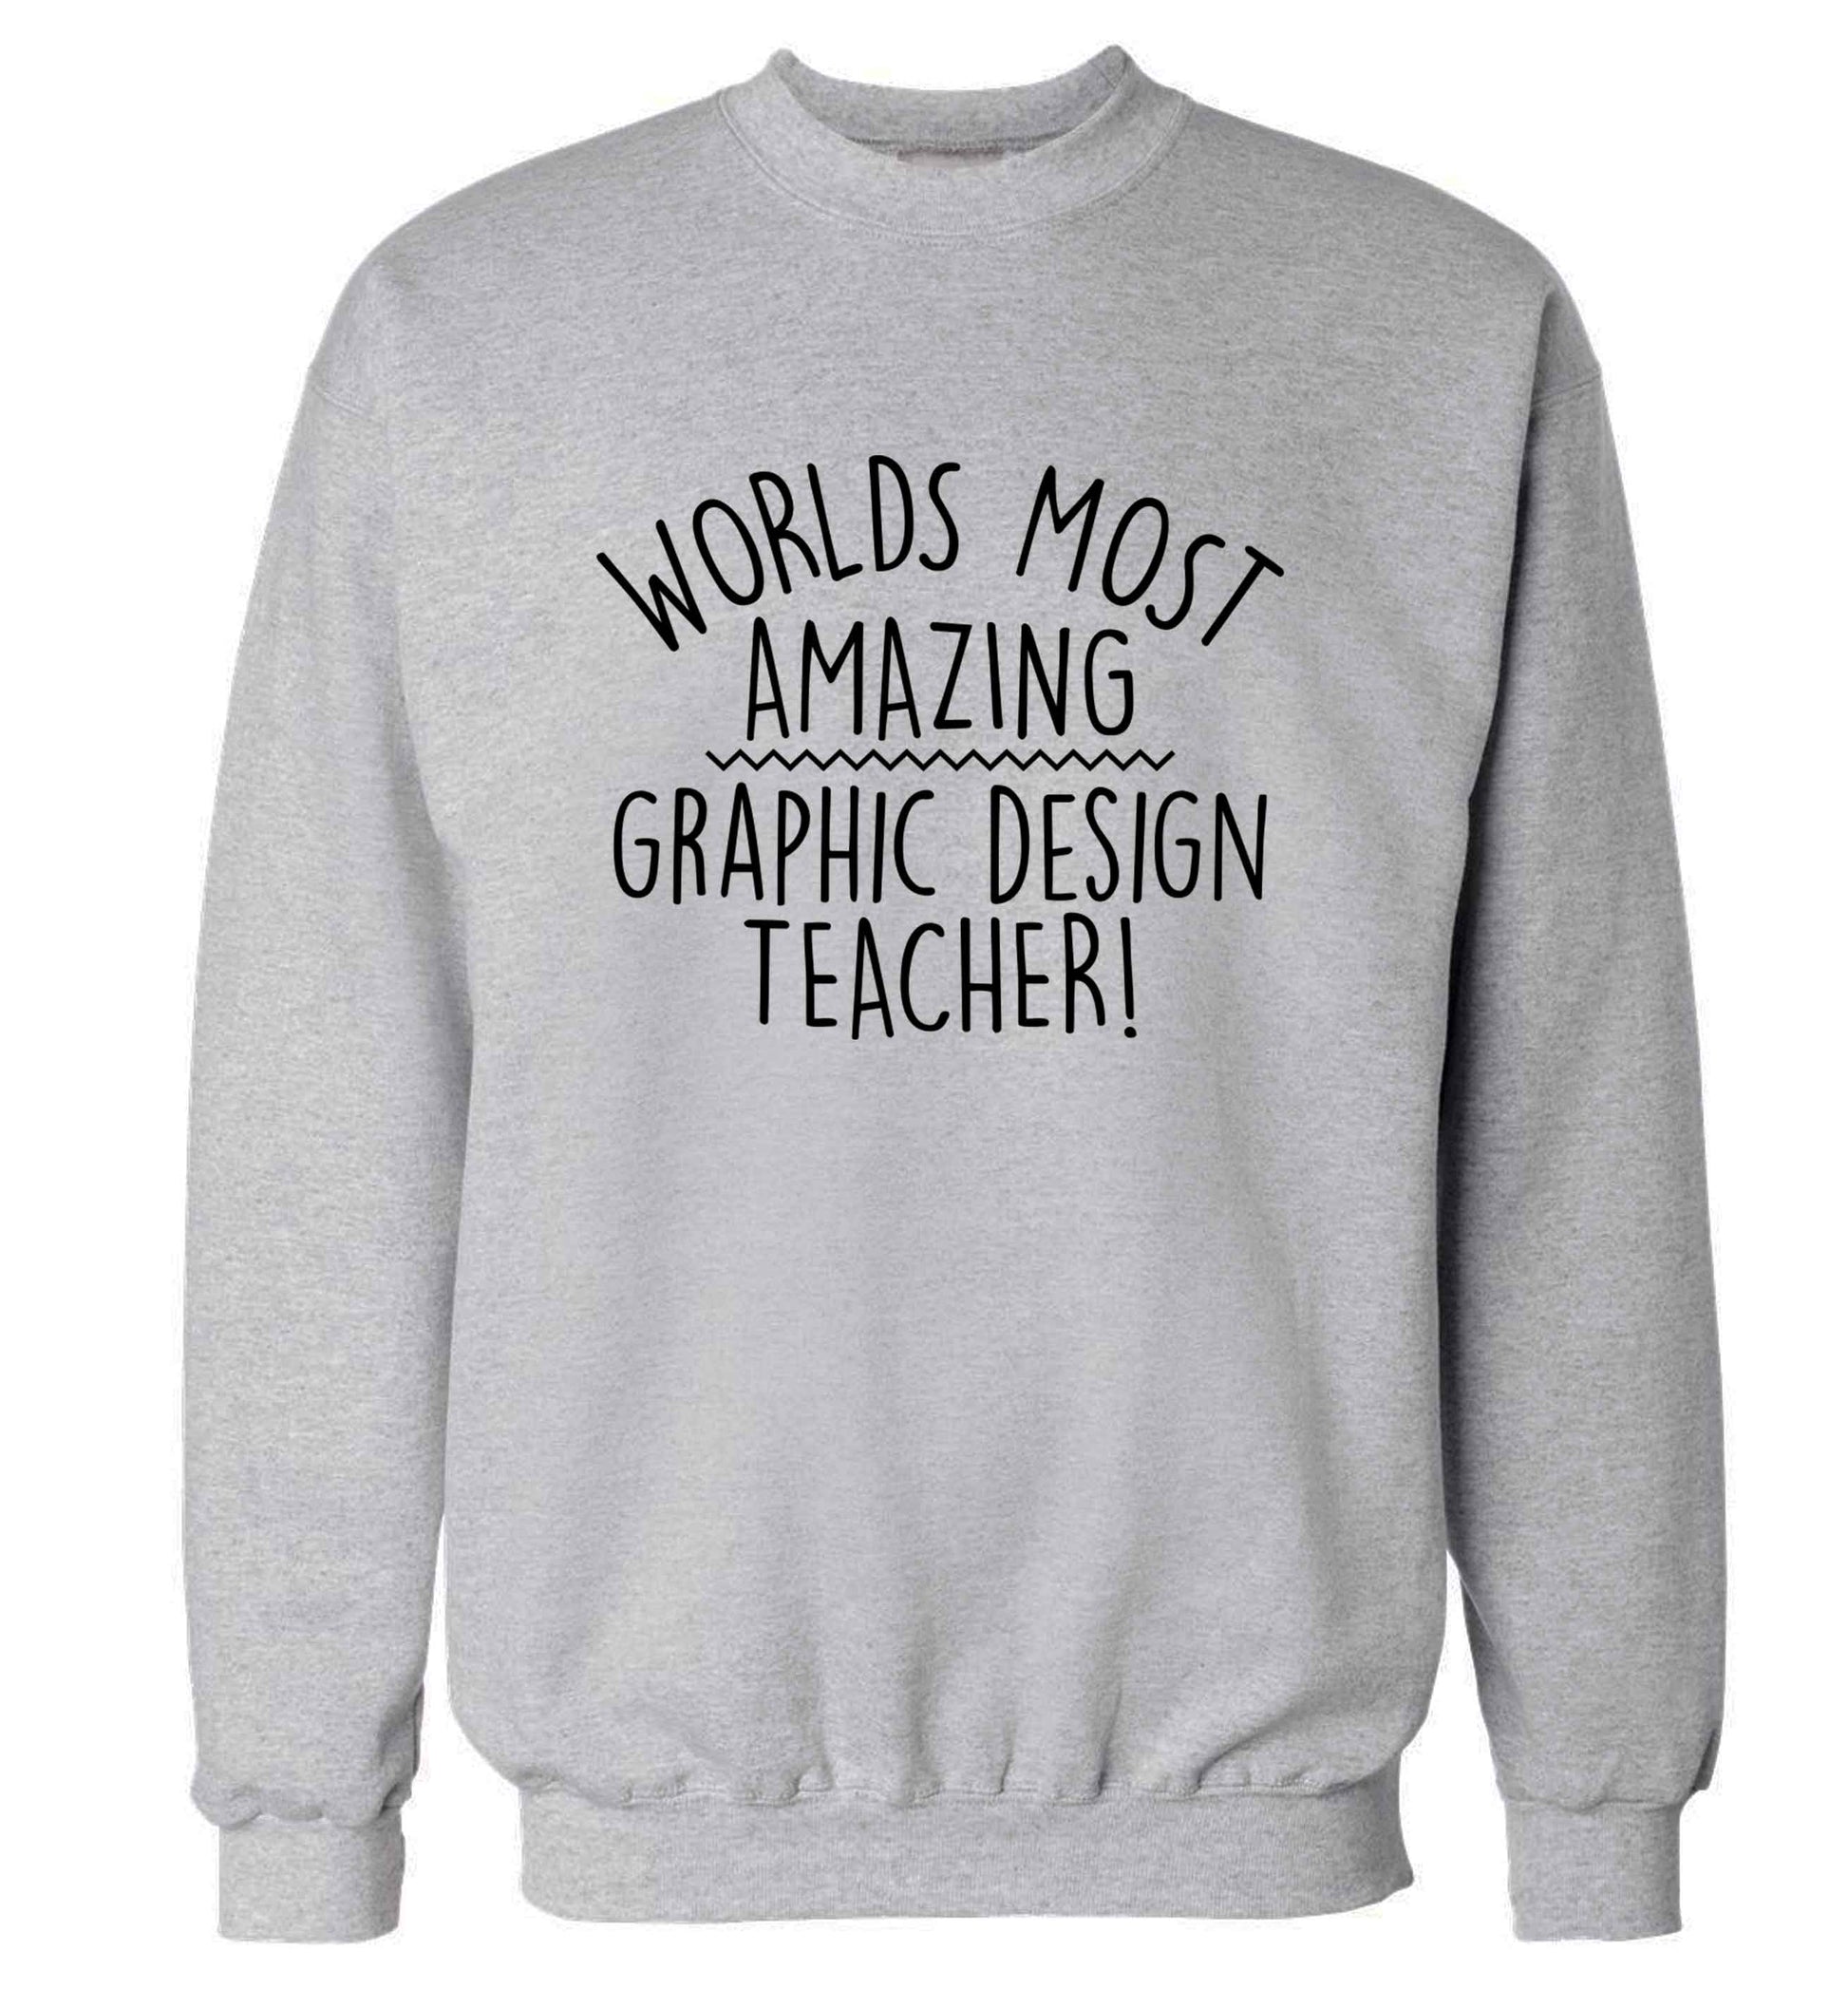 Worlds most amazing graphic design teacher adult's unisex grey sweater 2XL